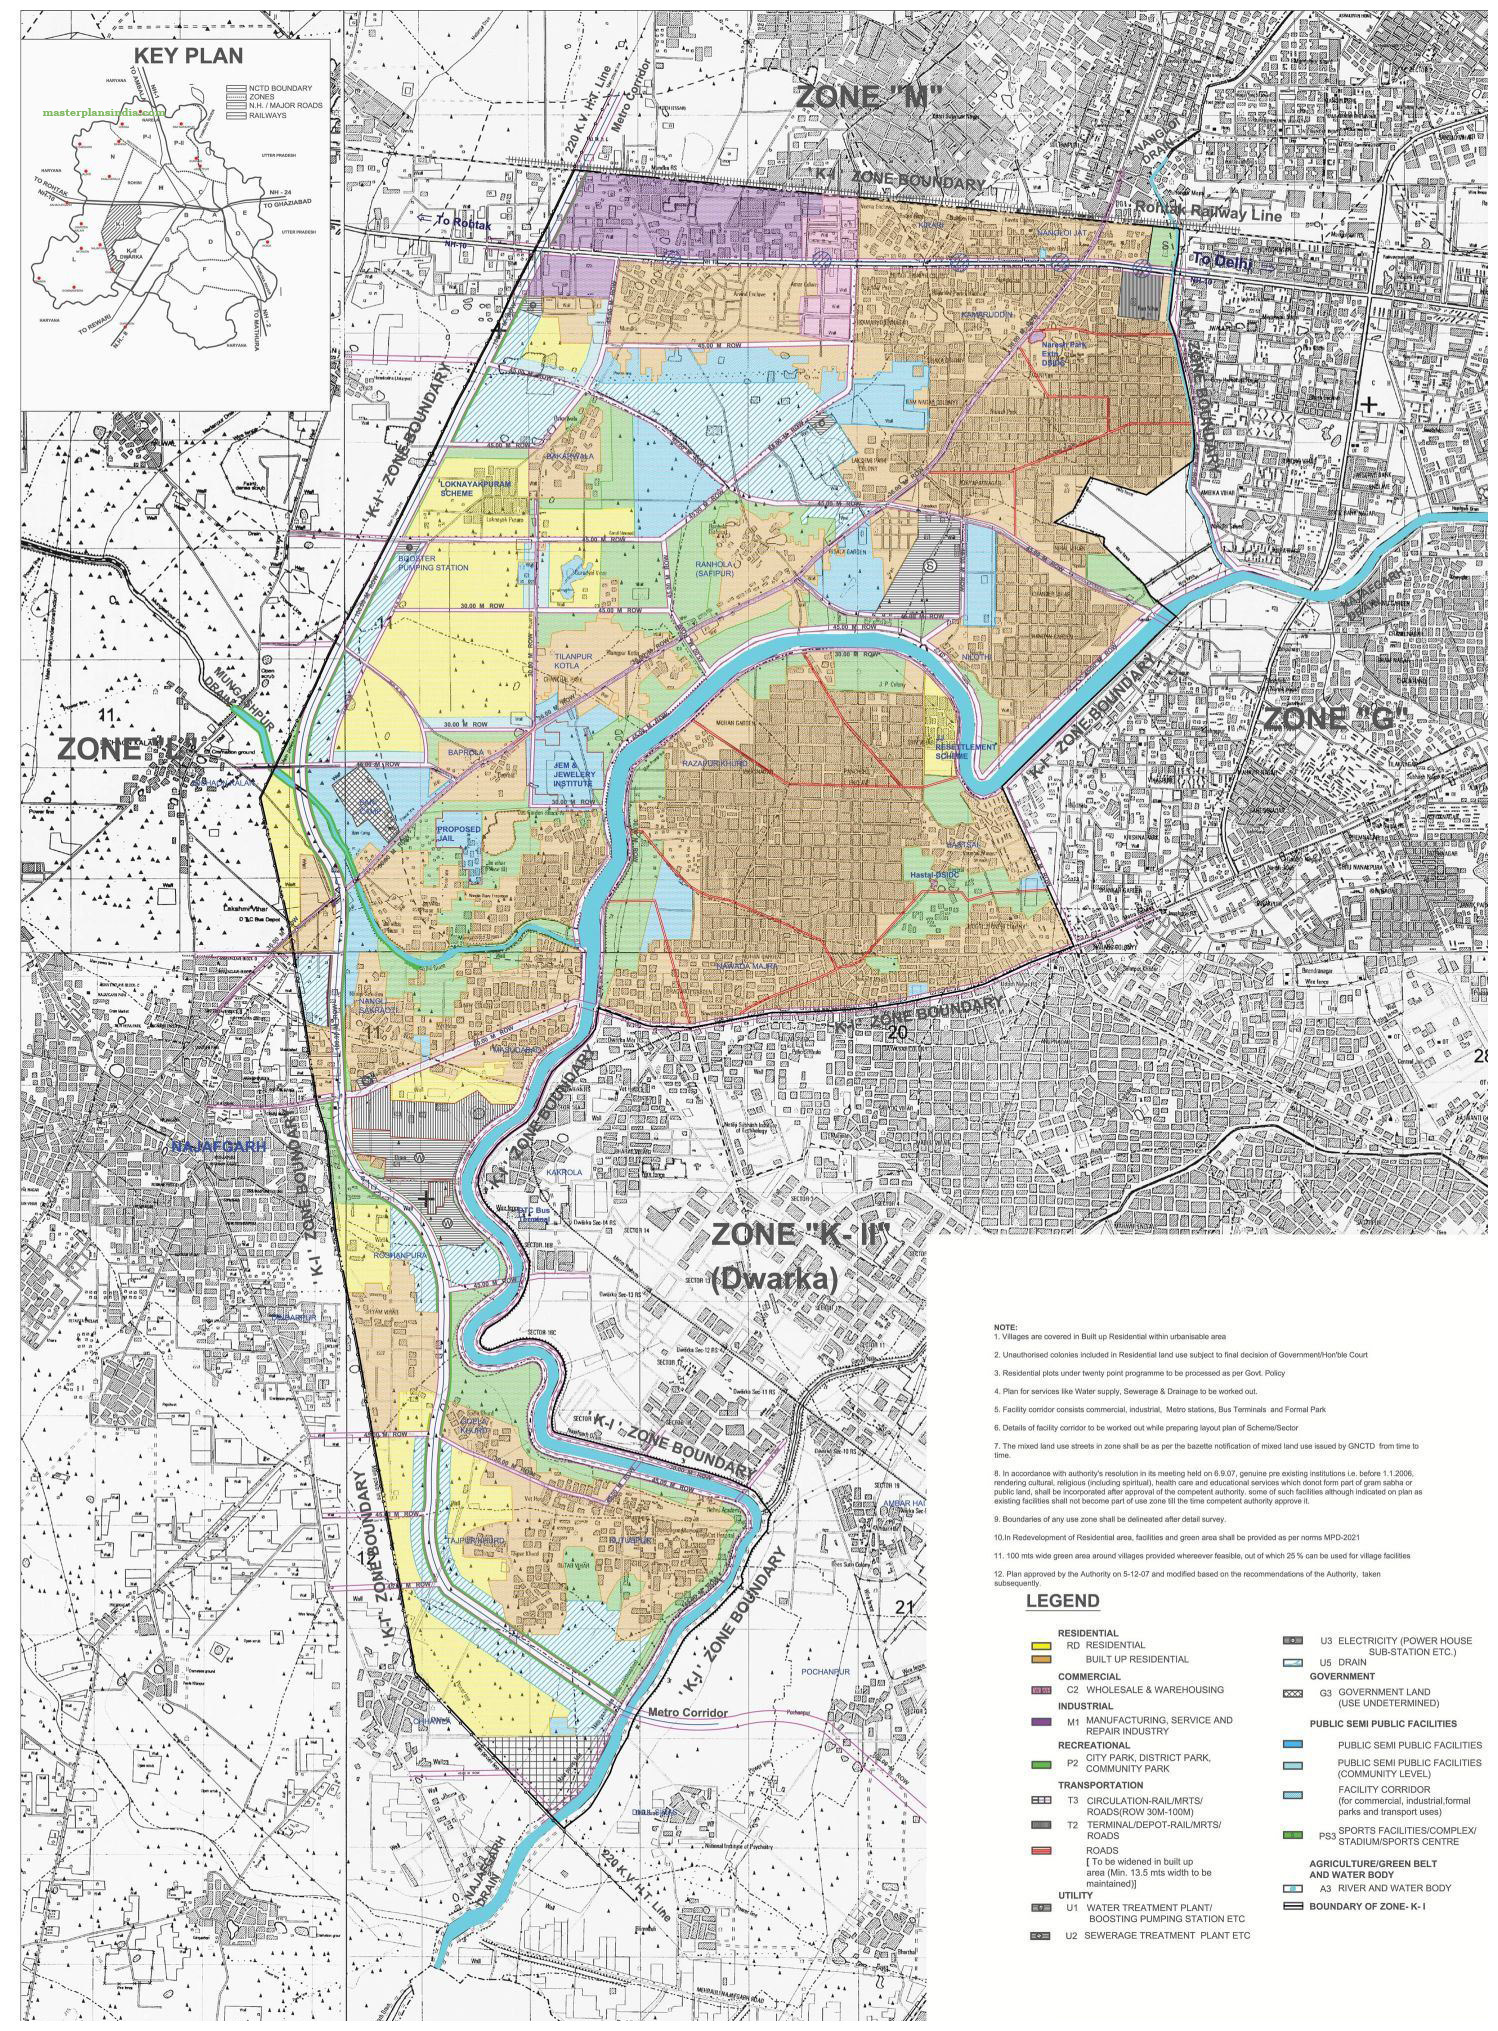 Zonal Development Plan Map Zone K1 South West Delhi 1 Master Plans India